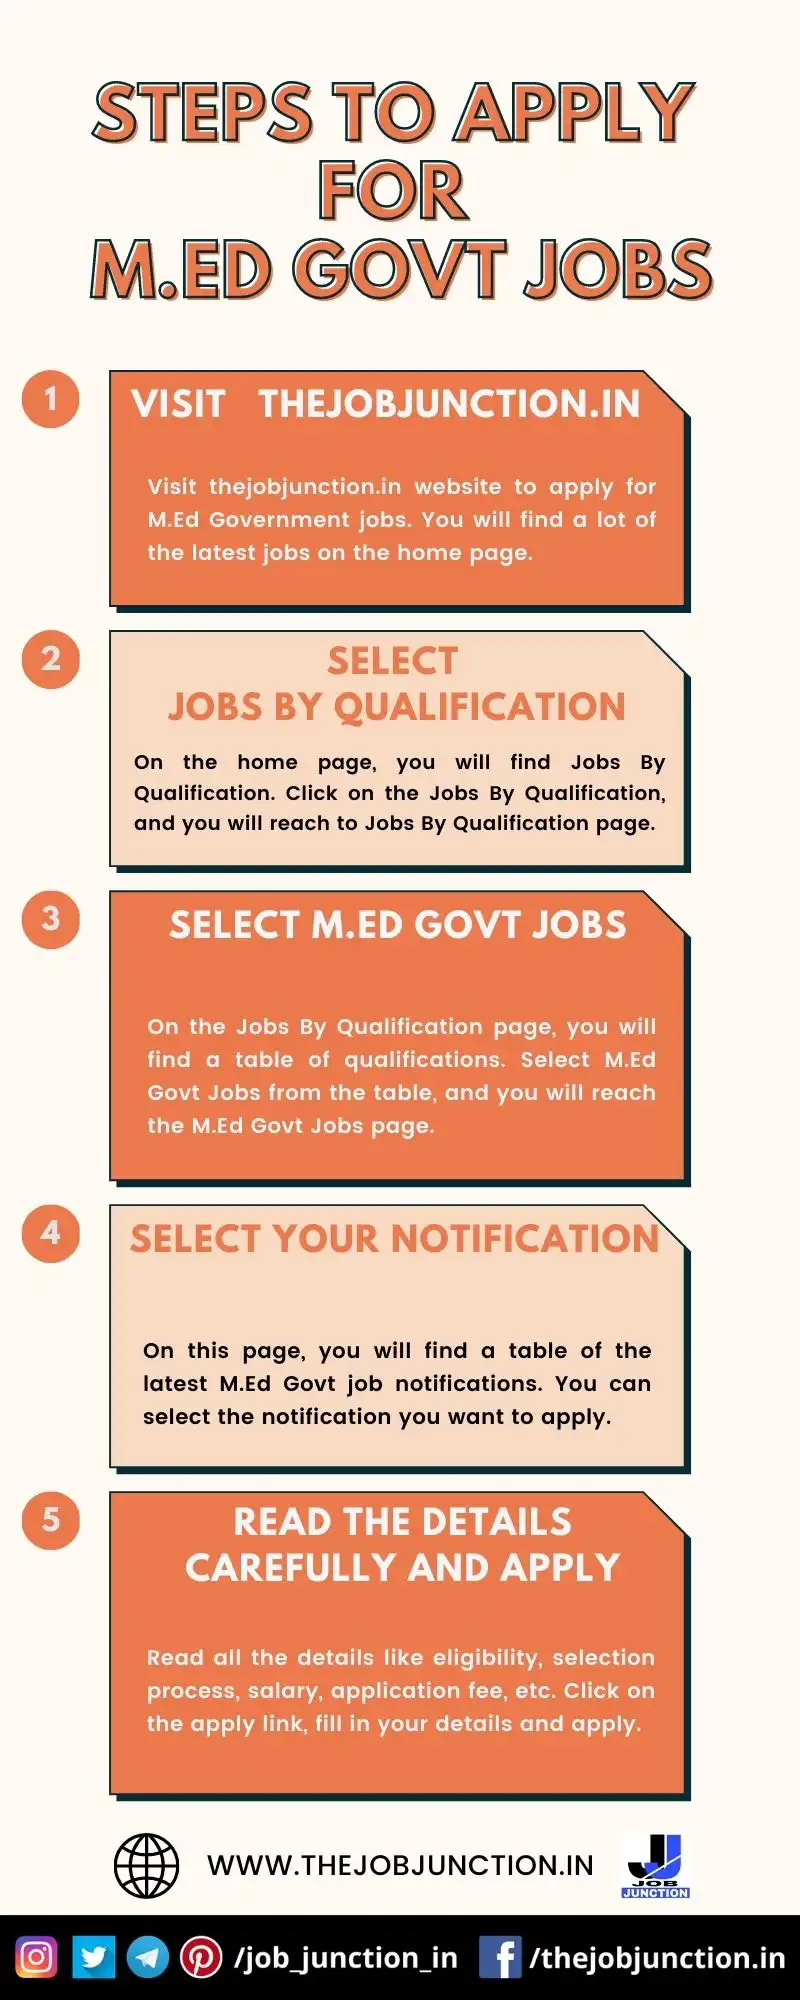 STEPS TO APPLY FOR M.ED GOVT JOBS